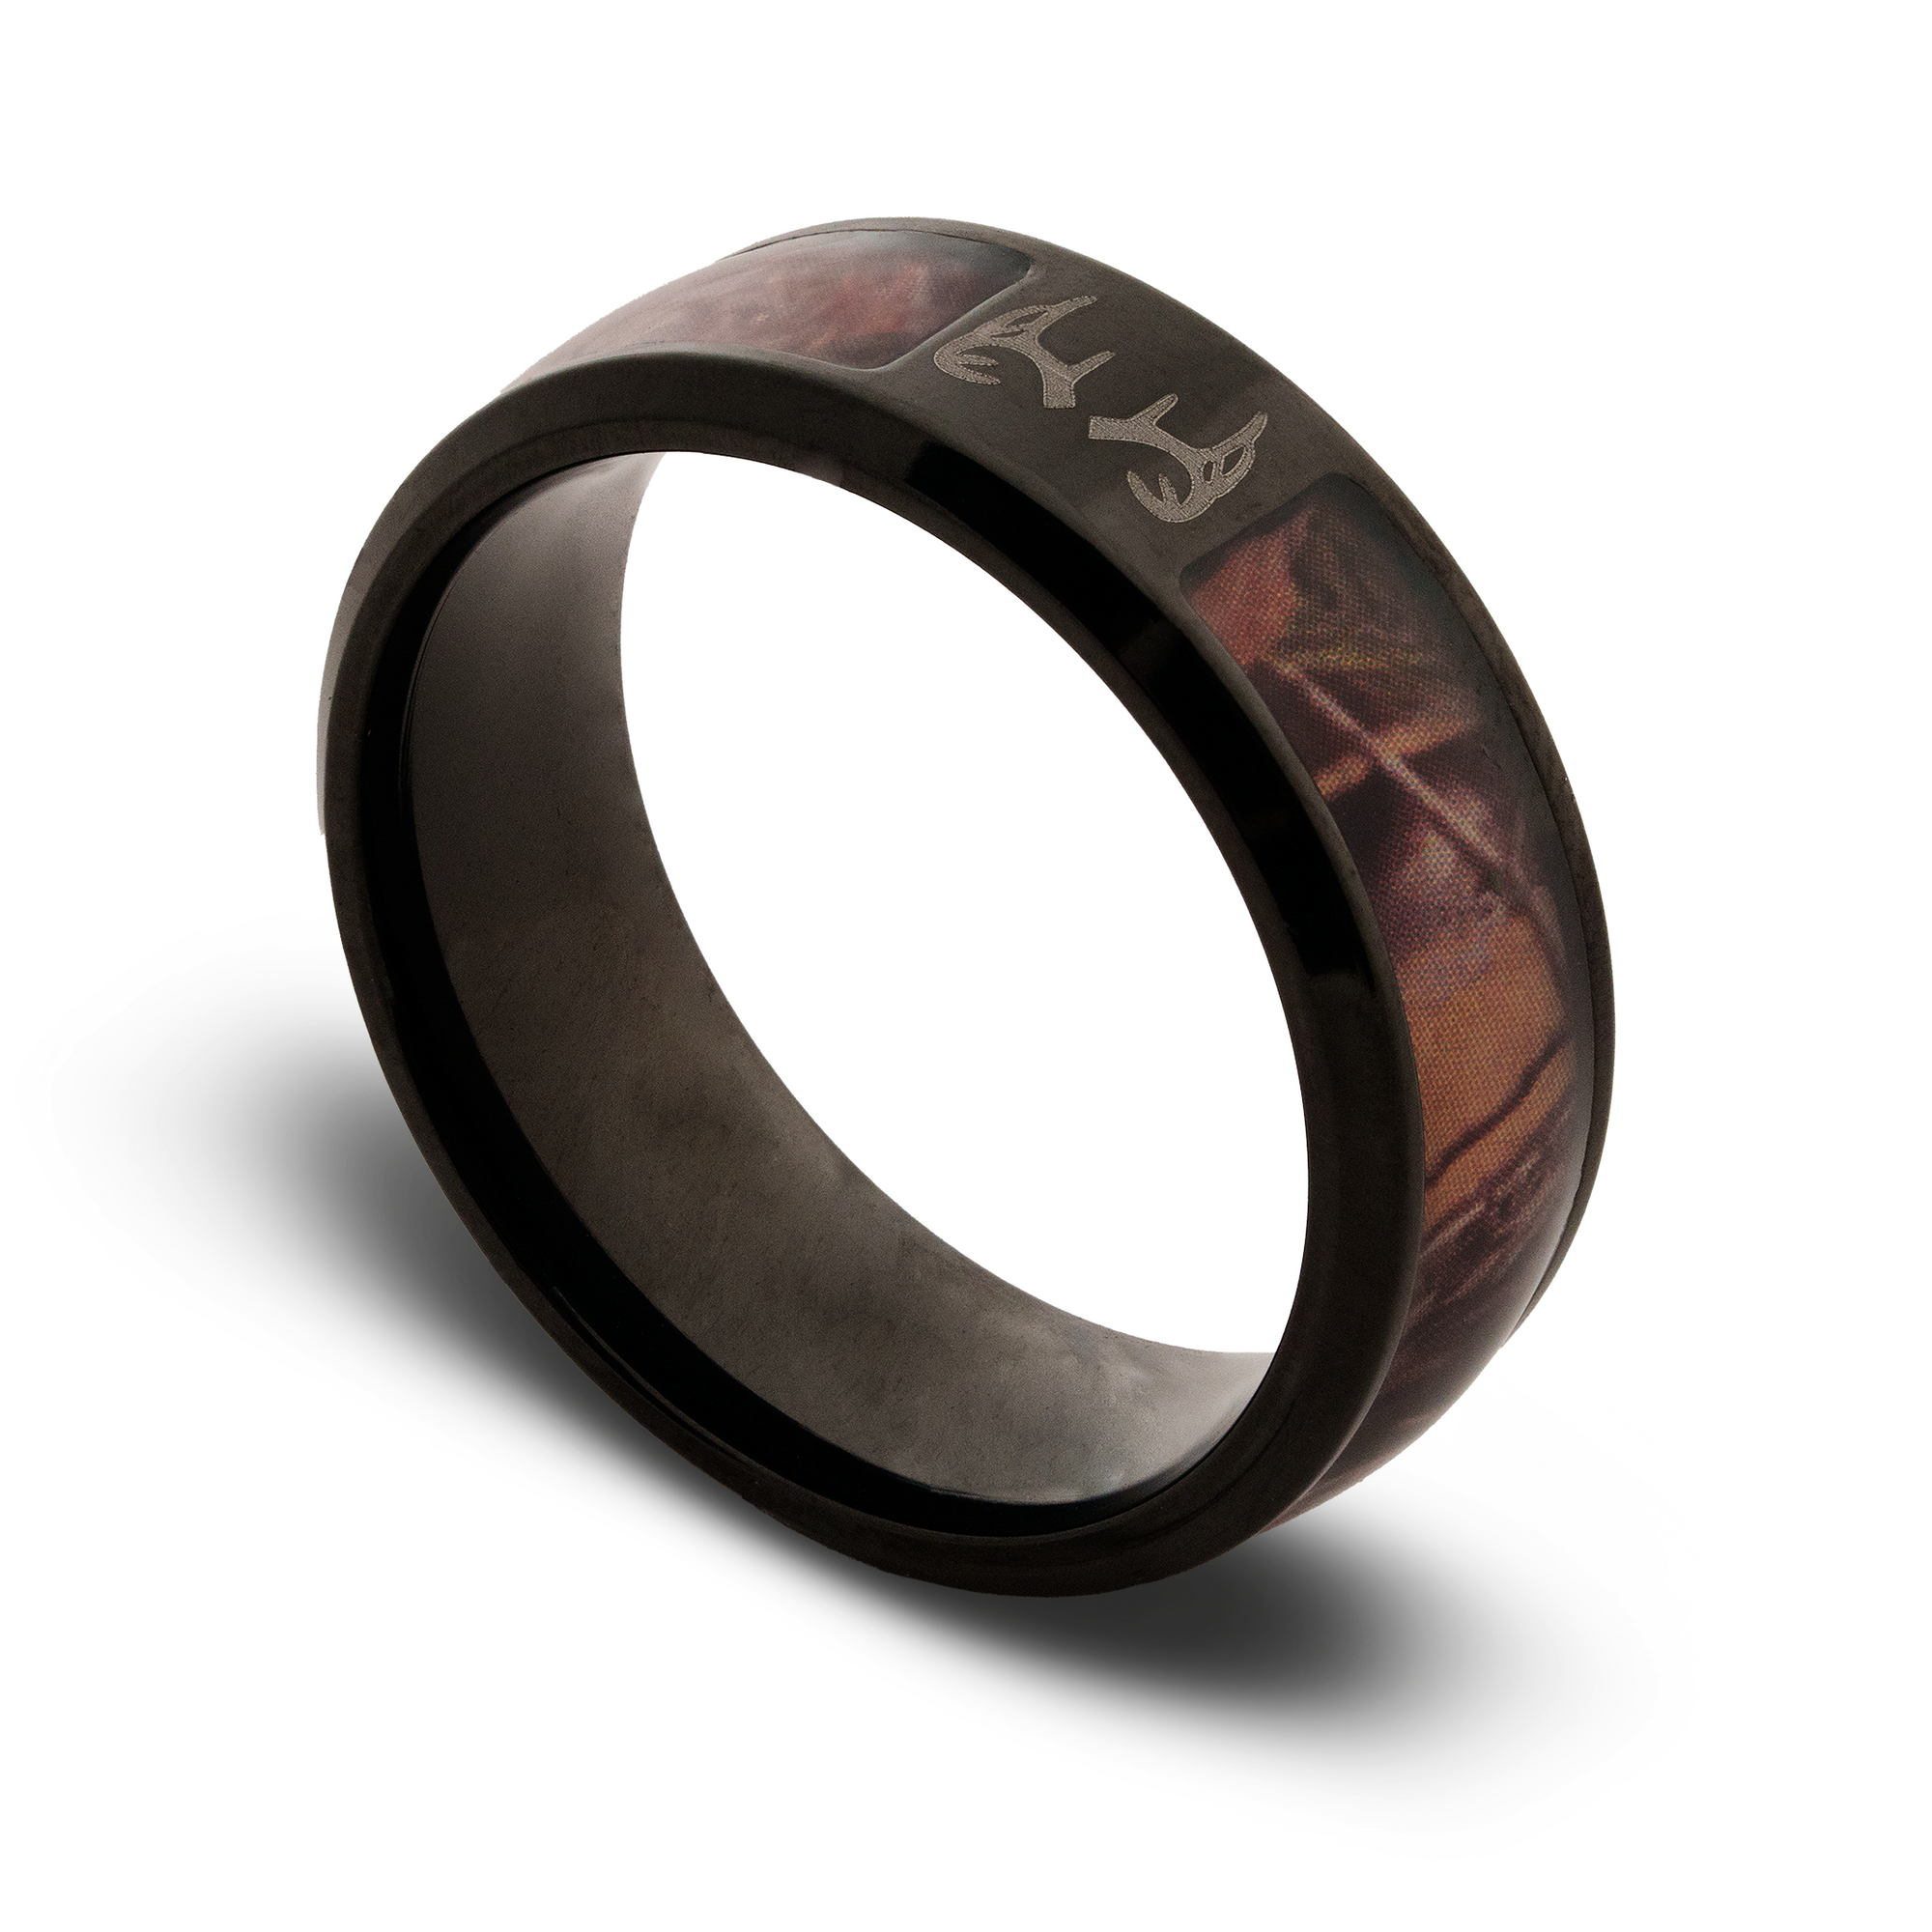 The “Huntsman” Ring